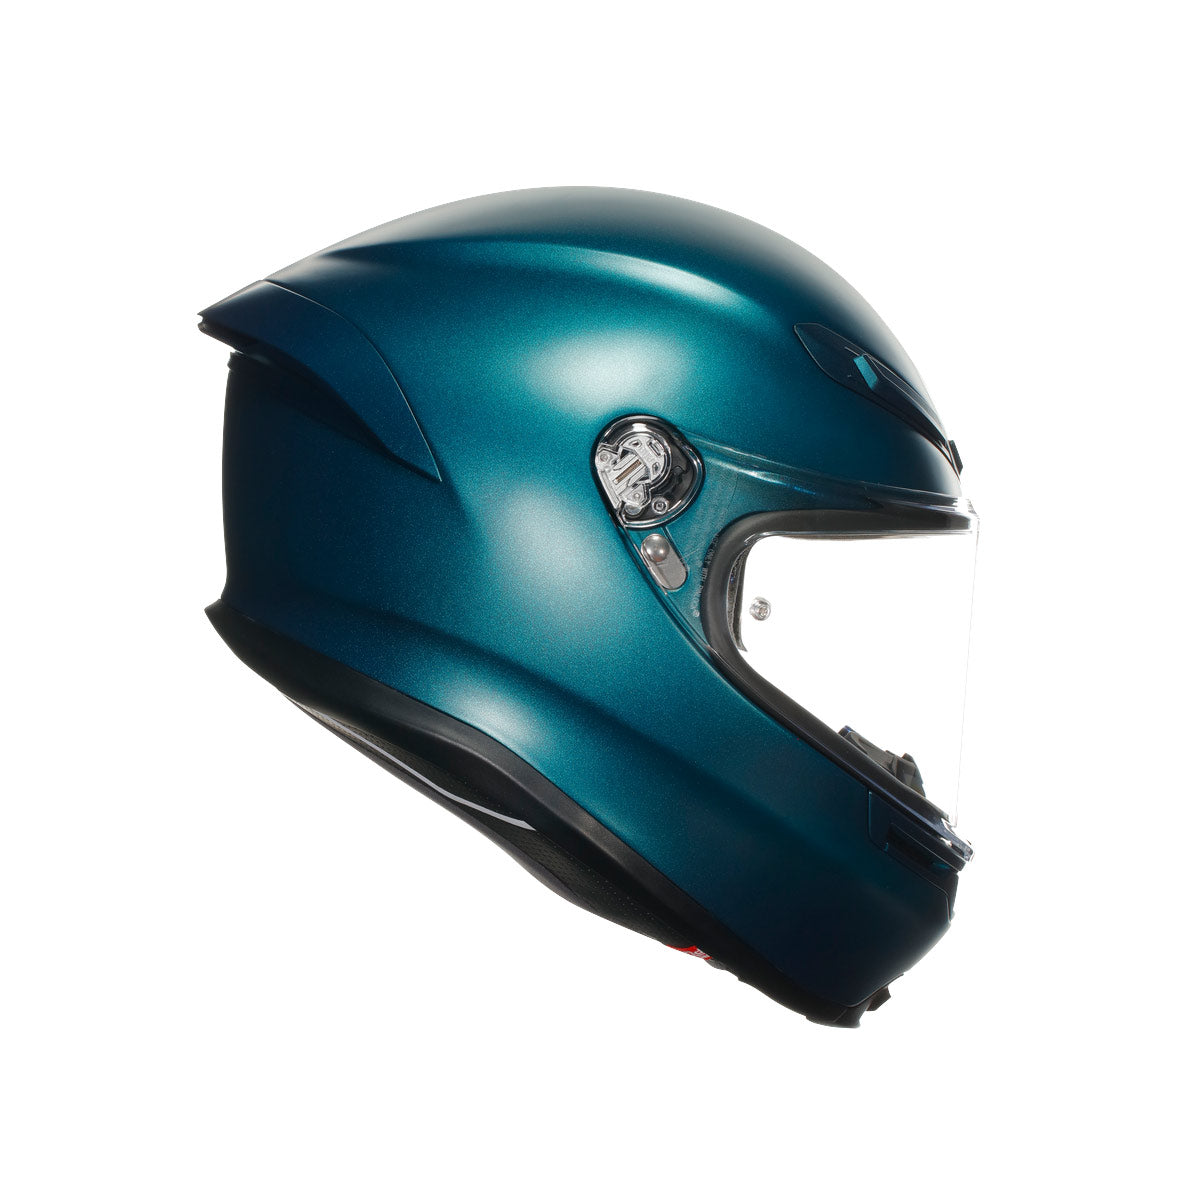 AGV K6 S Helmet - Matte Petrolio